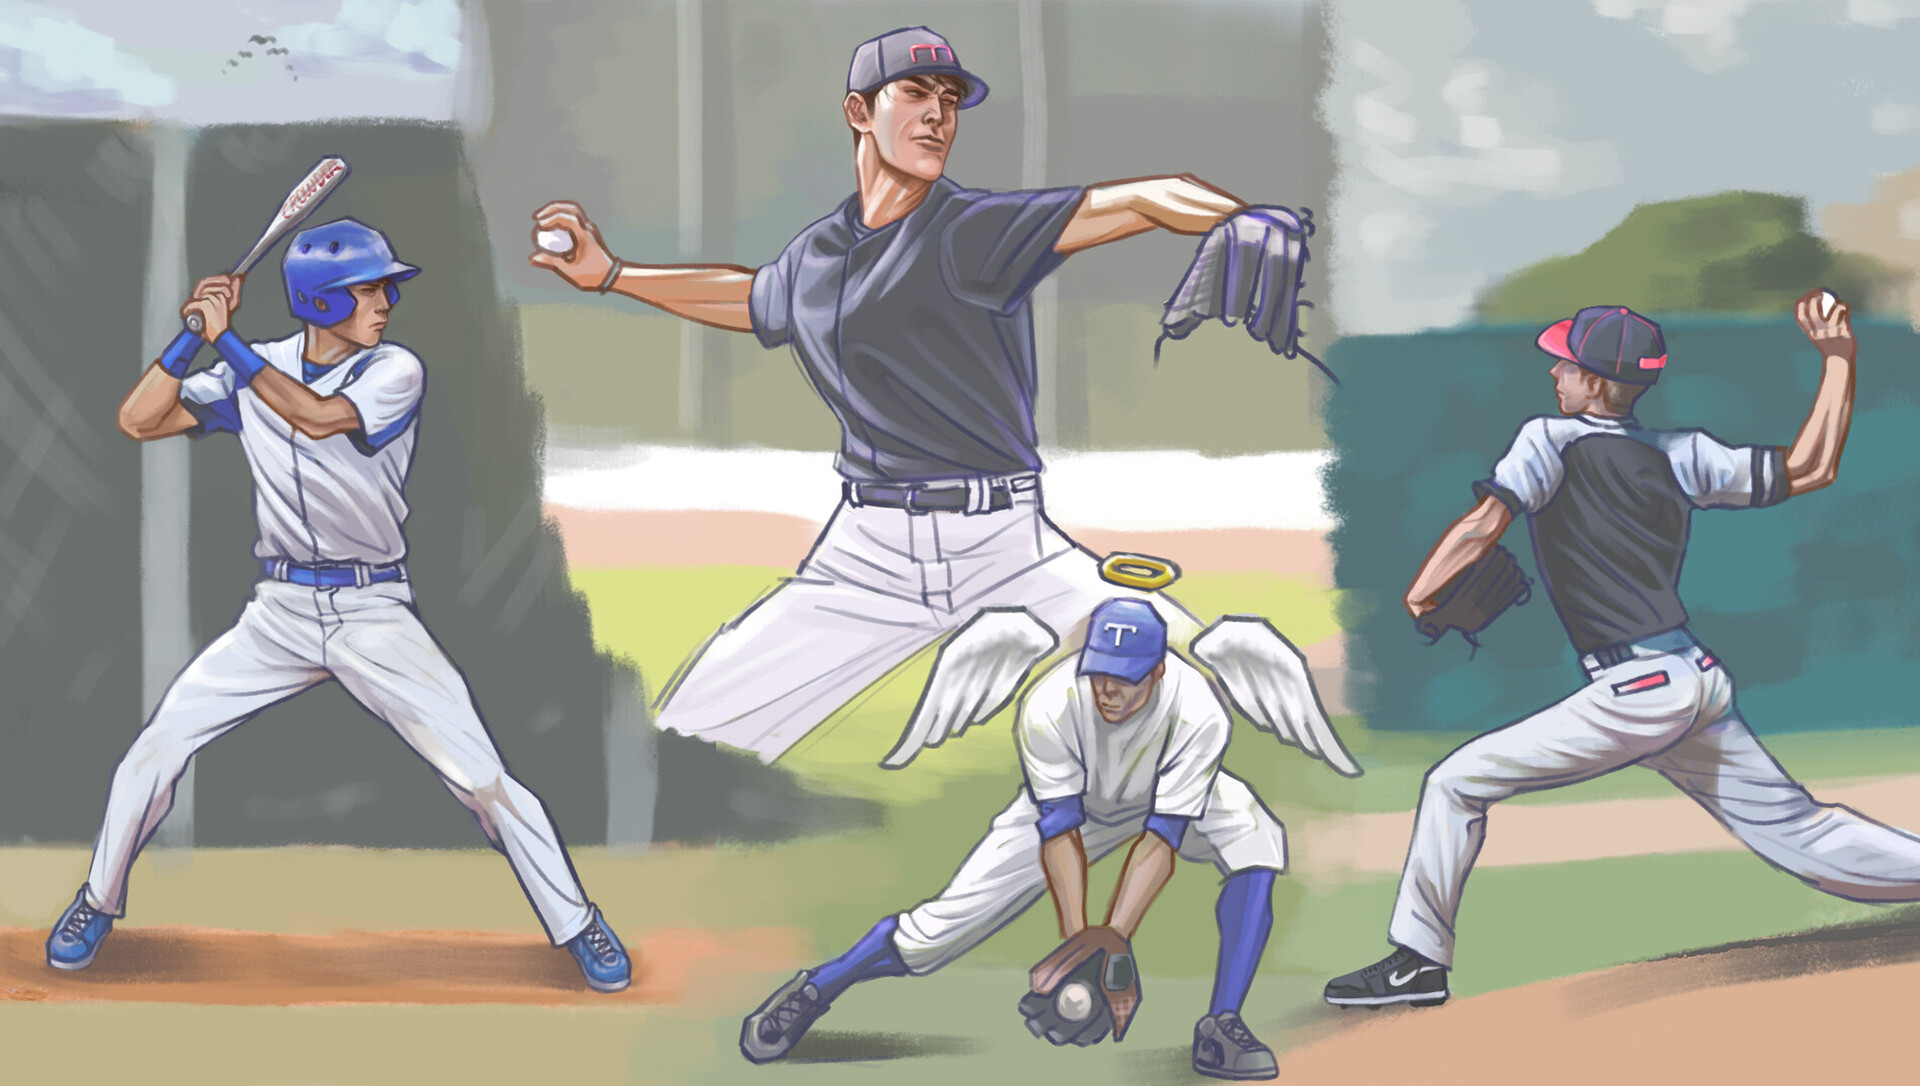 ArtStation - Pose Study: Baseball